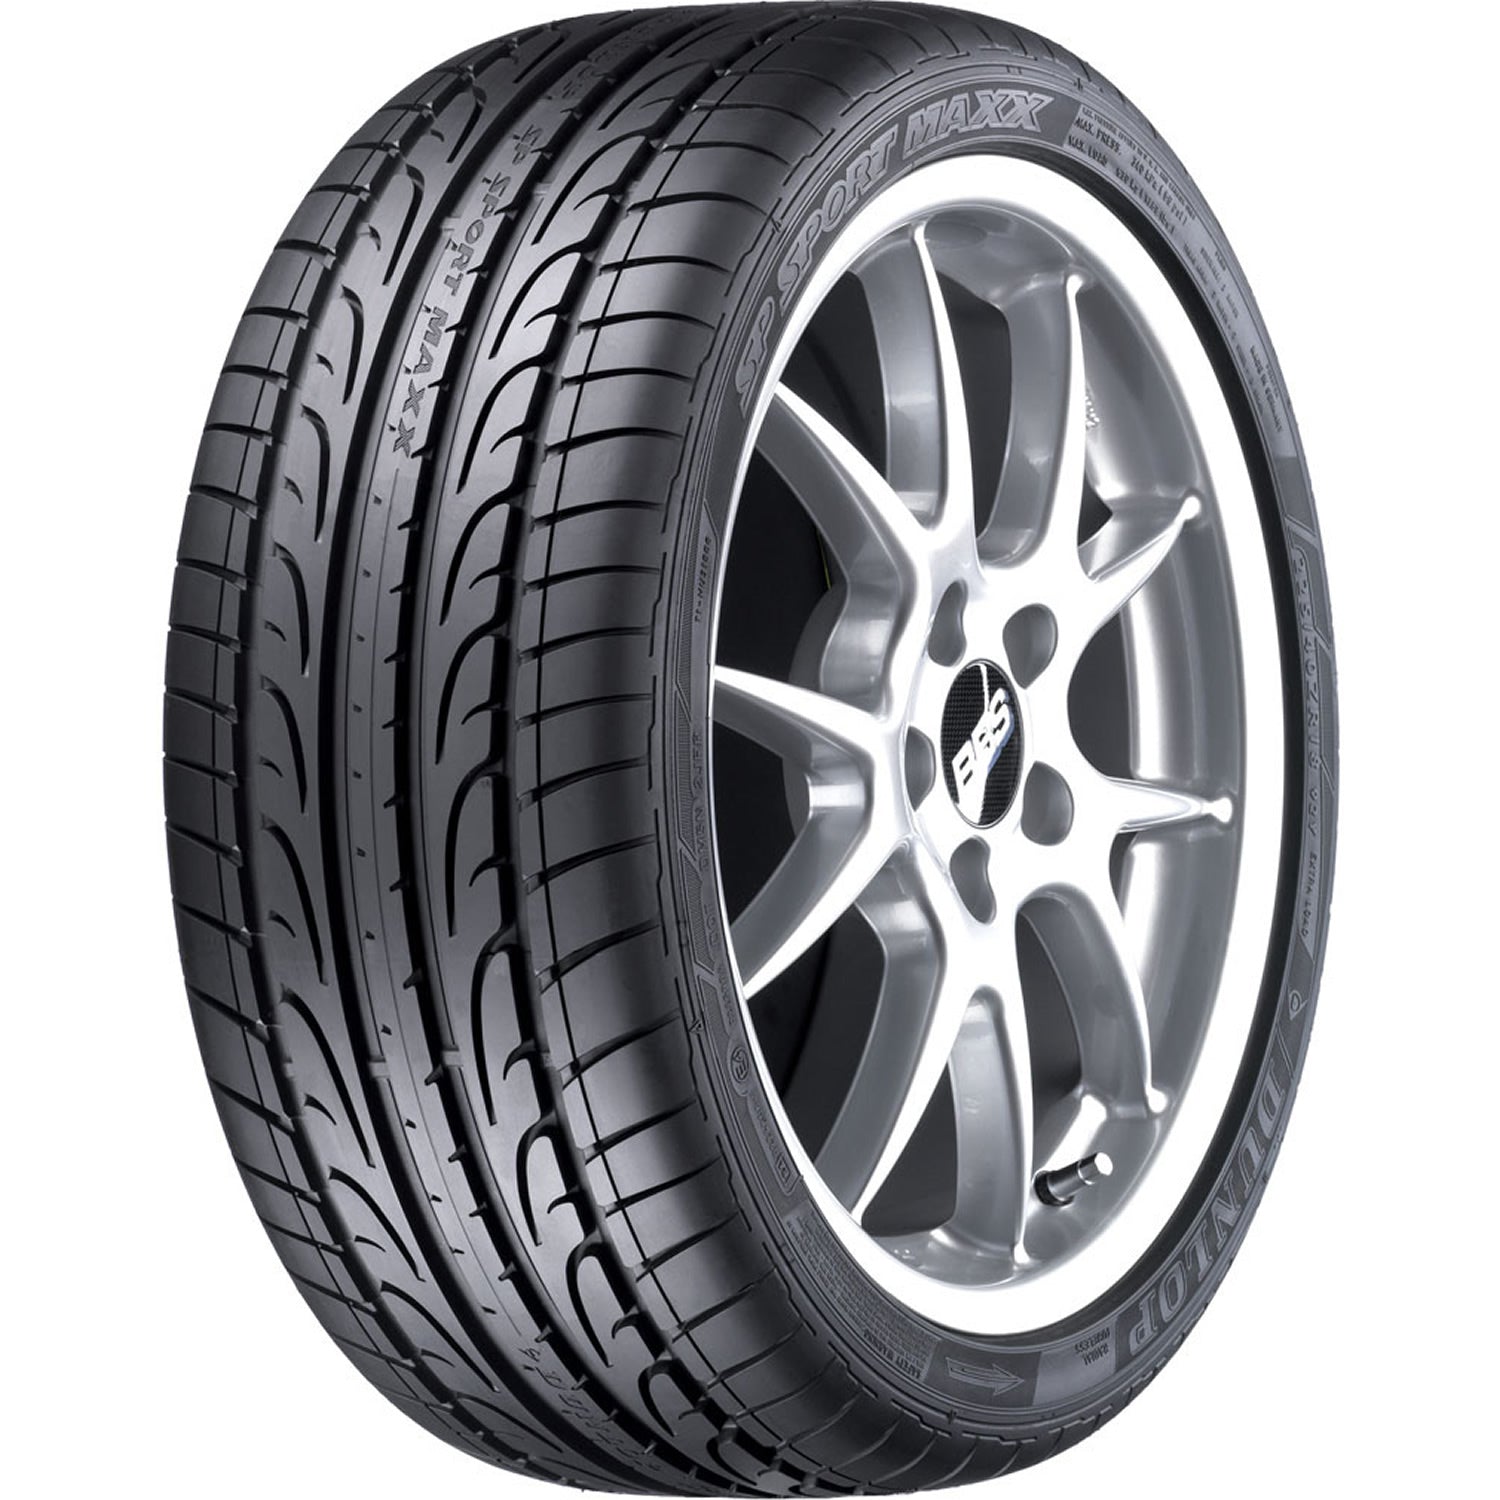 DUNLOP SP SPORT MAXX 235/40R19 (26.4X9.3R 19) Tires